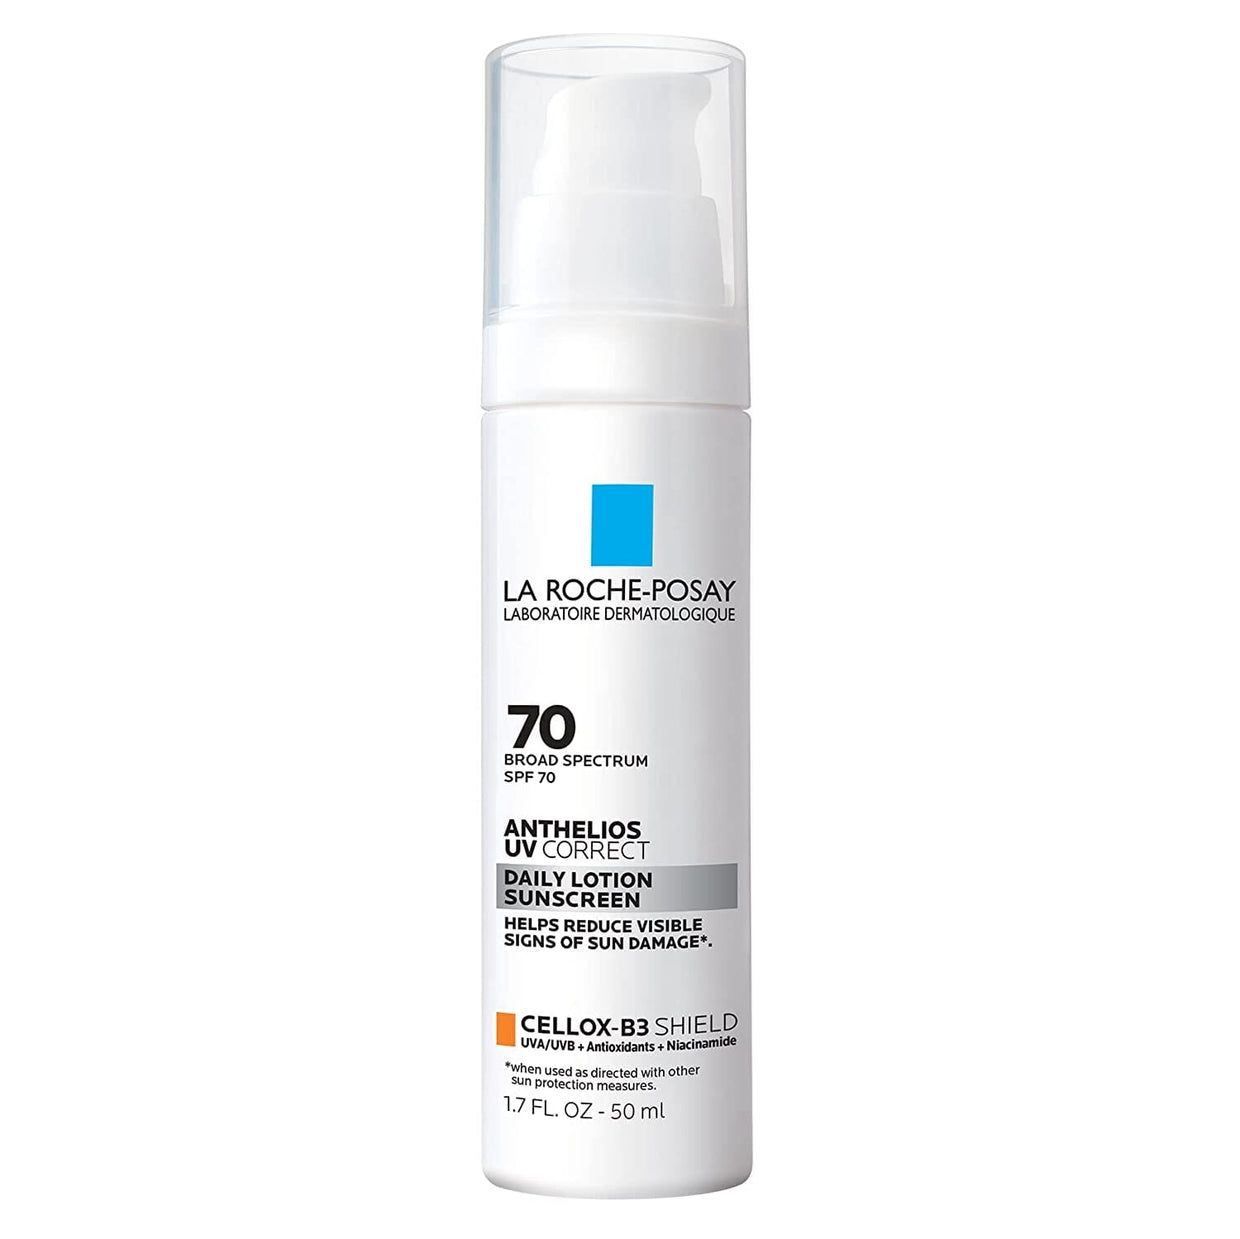 La Roche-Posay Anthelios UV Correct Face Sunscreen SPF 70 with Niacinamide La Roche-Posay 1.7 oz. Shop at Exclusive Beauty Club